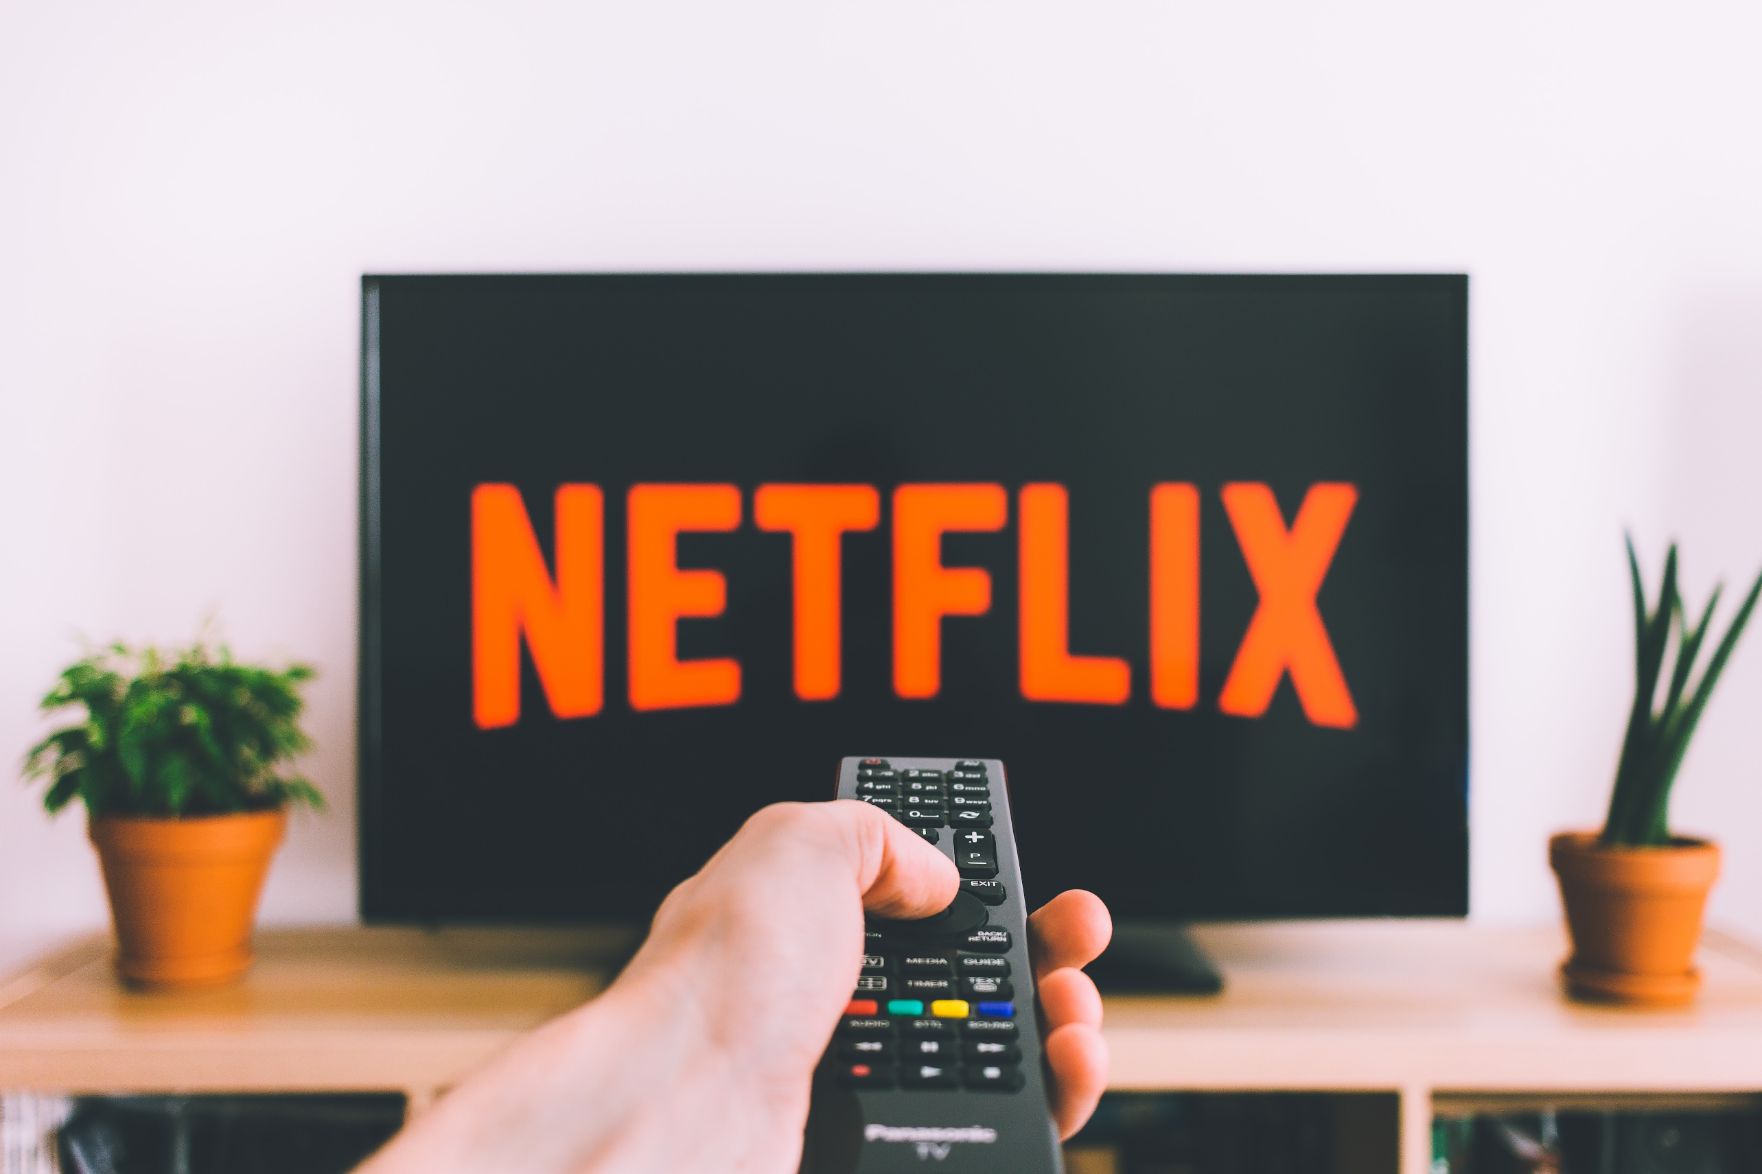 Top 10 Netflix Alternatives in 2020